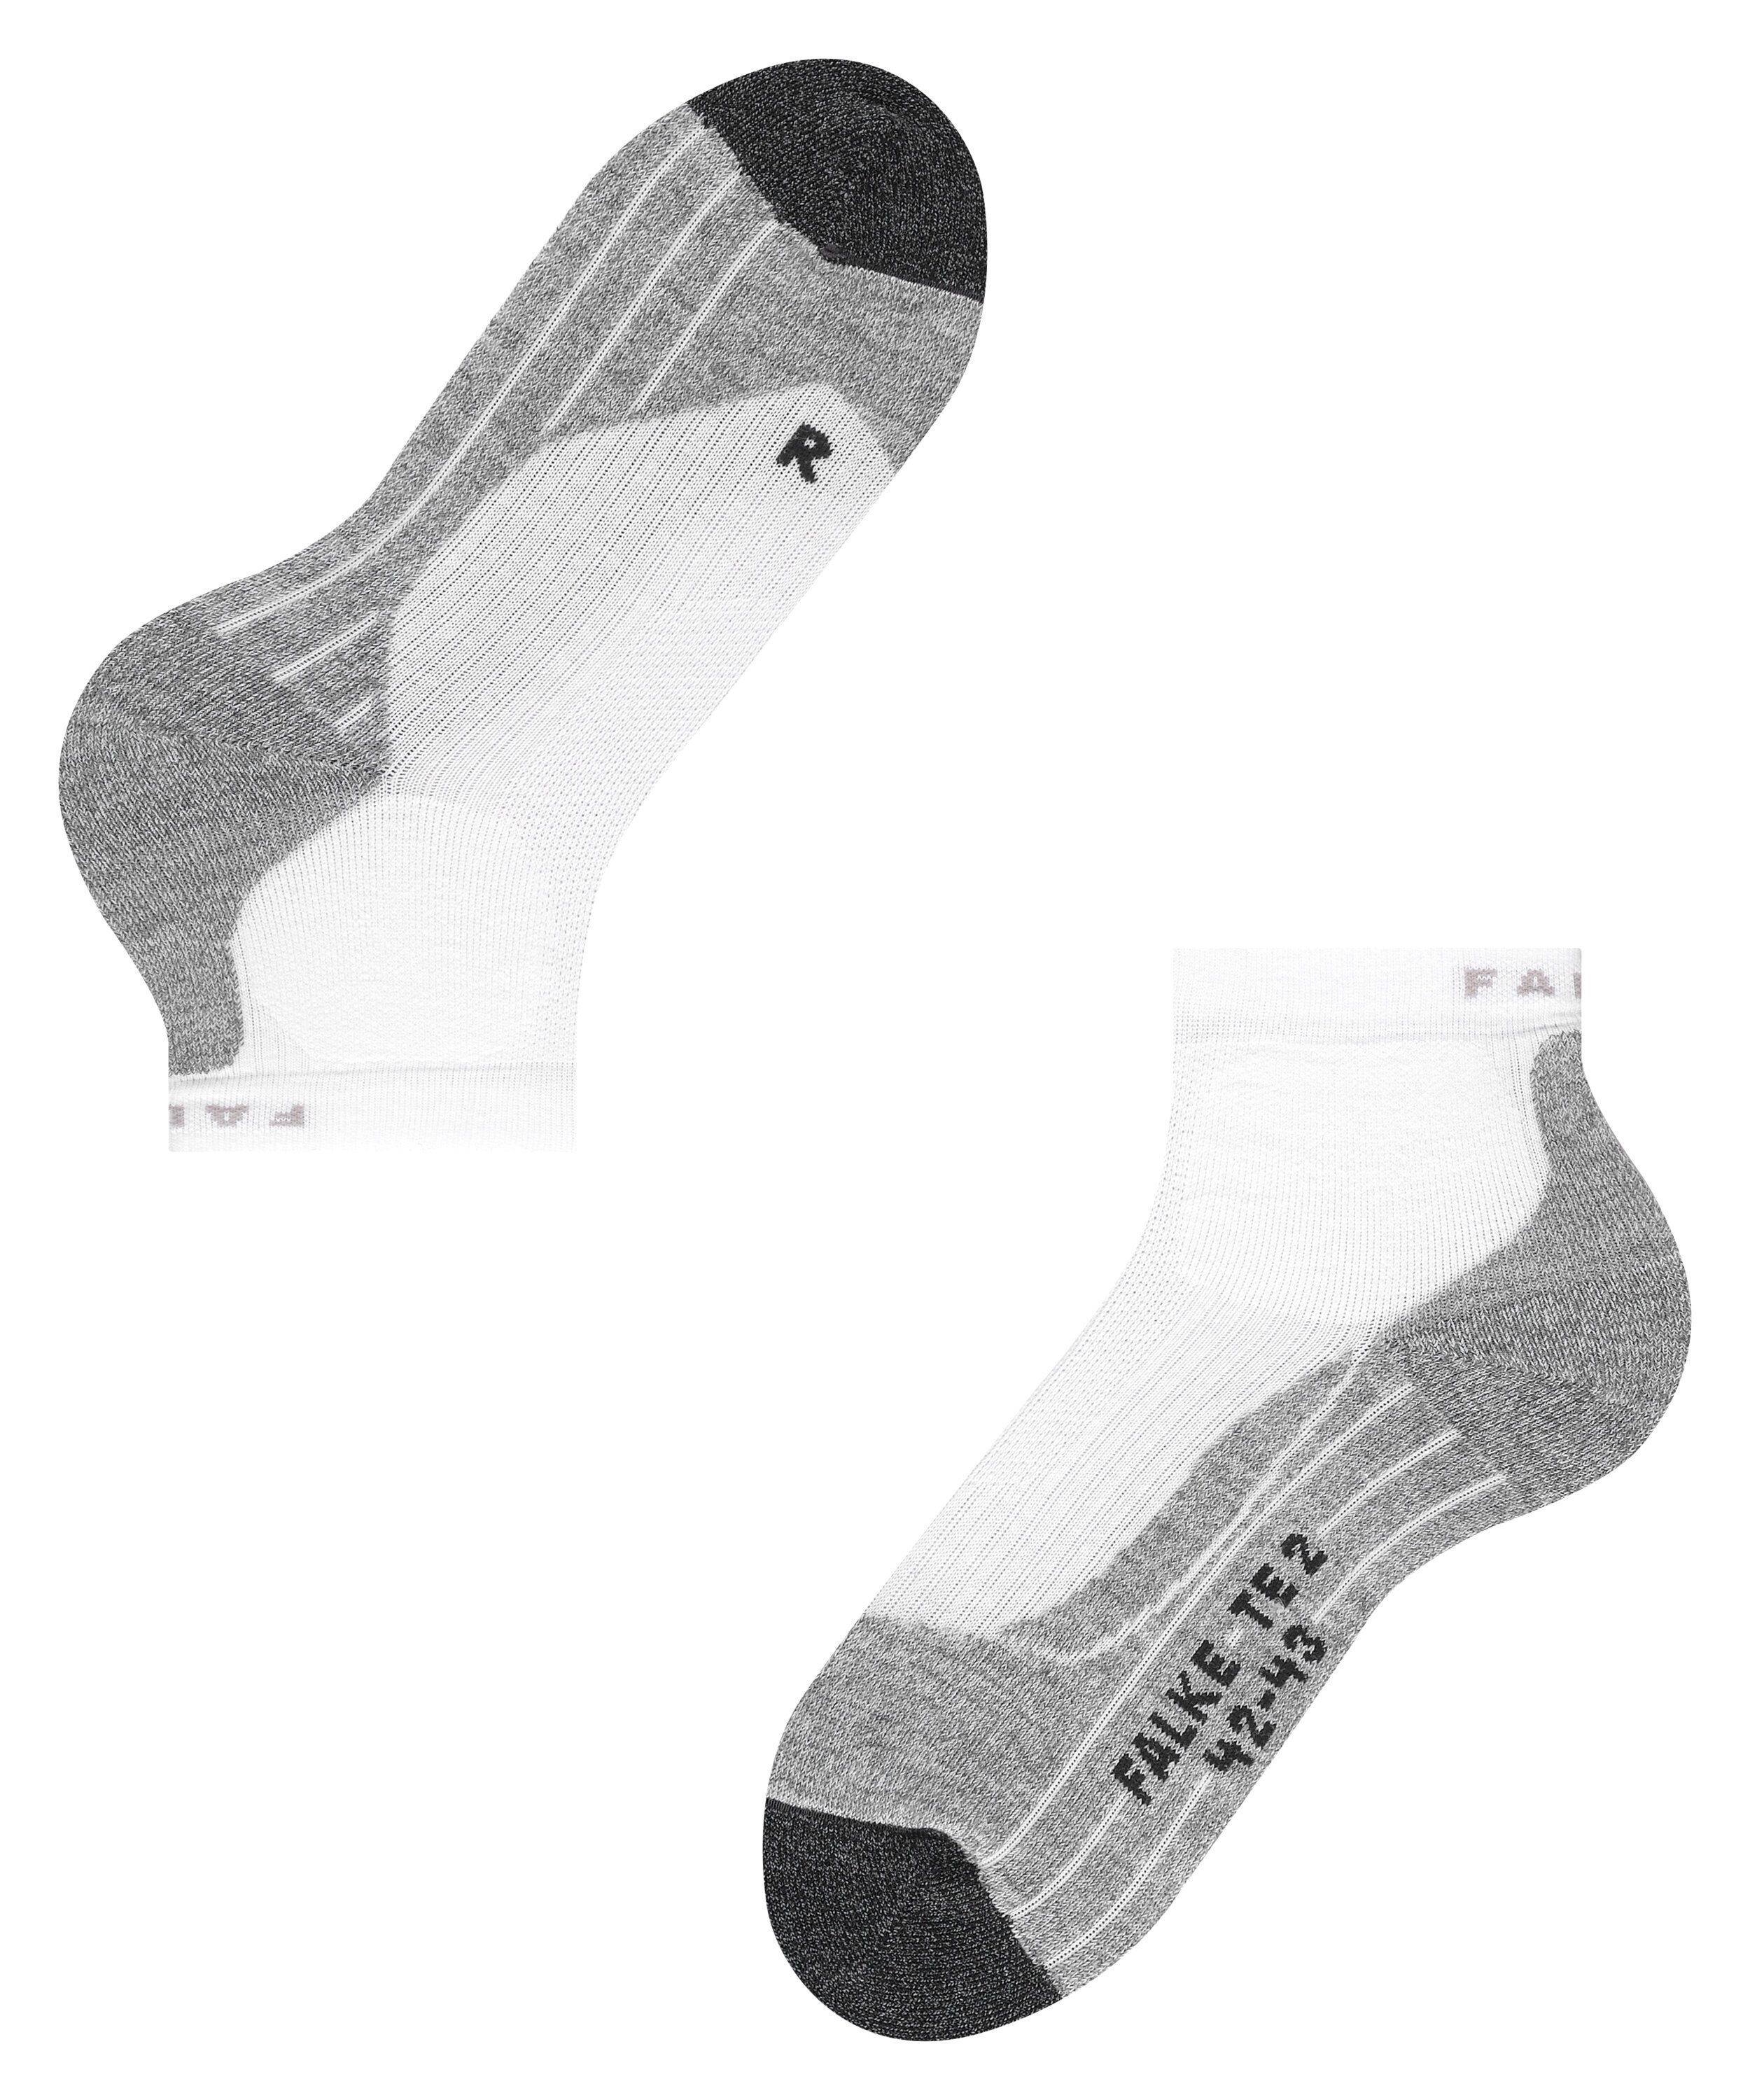 FALKE Tennissocken TE2 Short white-mix Stabilisierende Hartplätze Socken (1-Paar) für (2020)